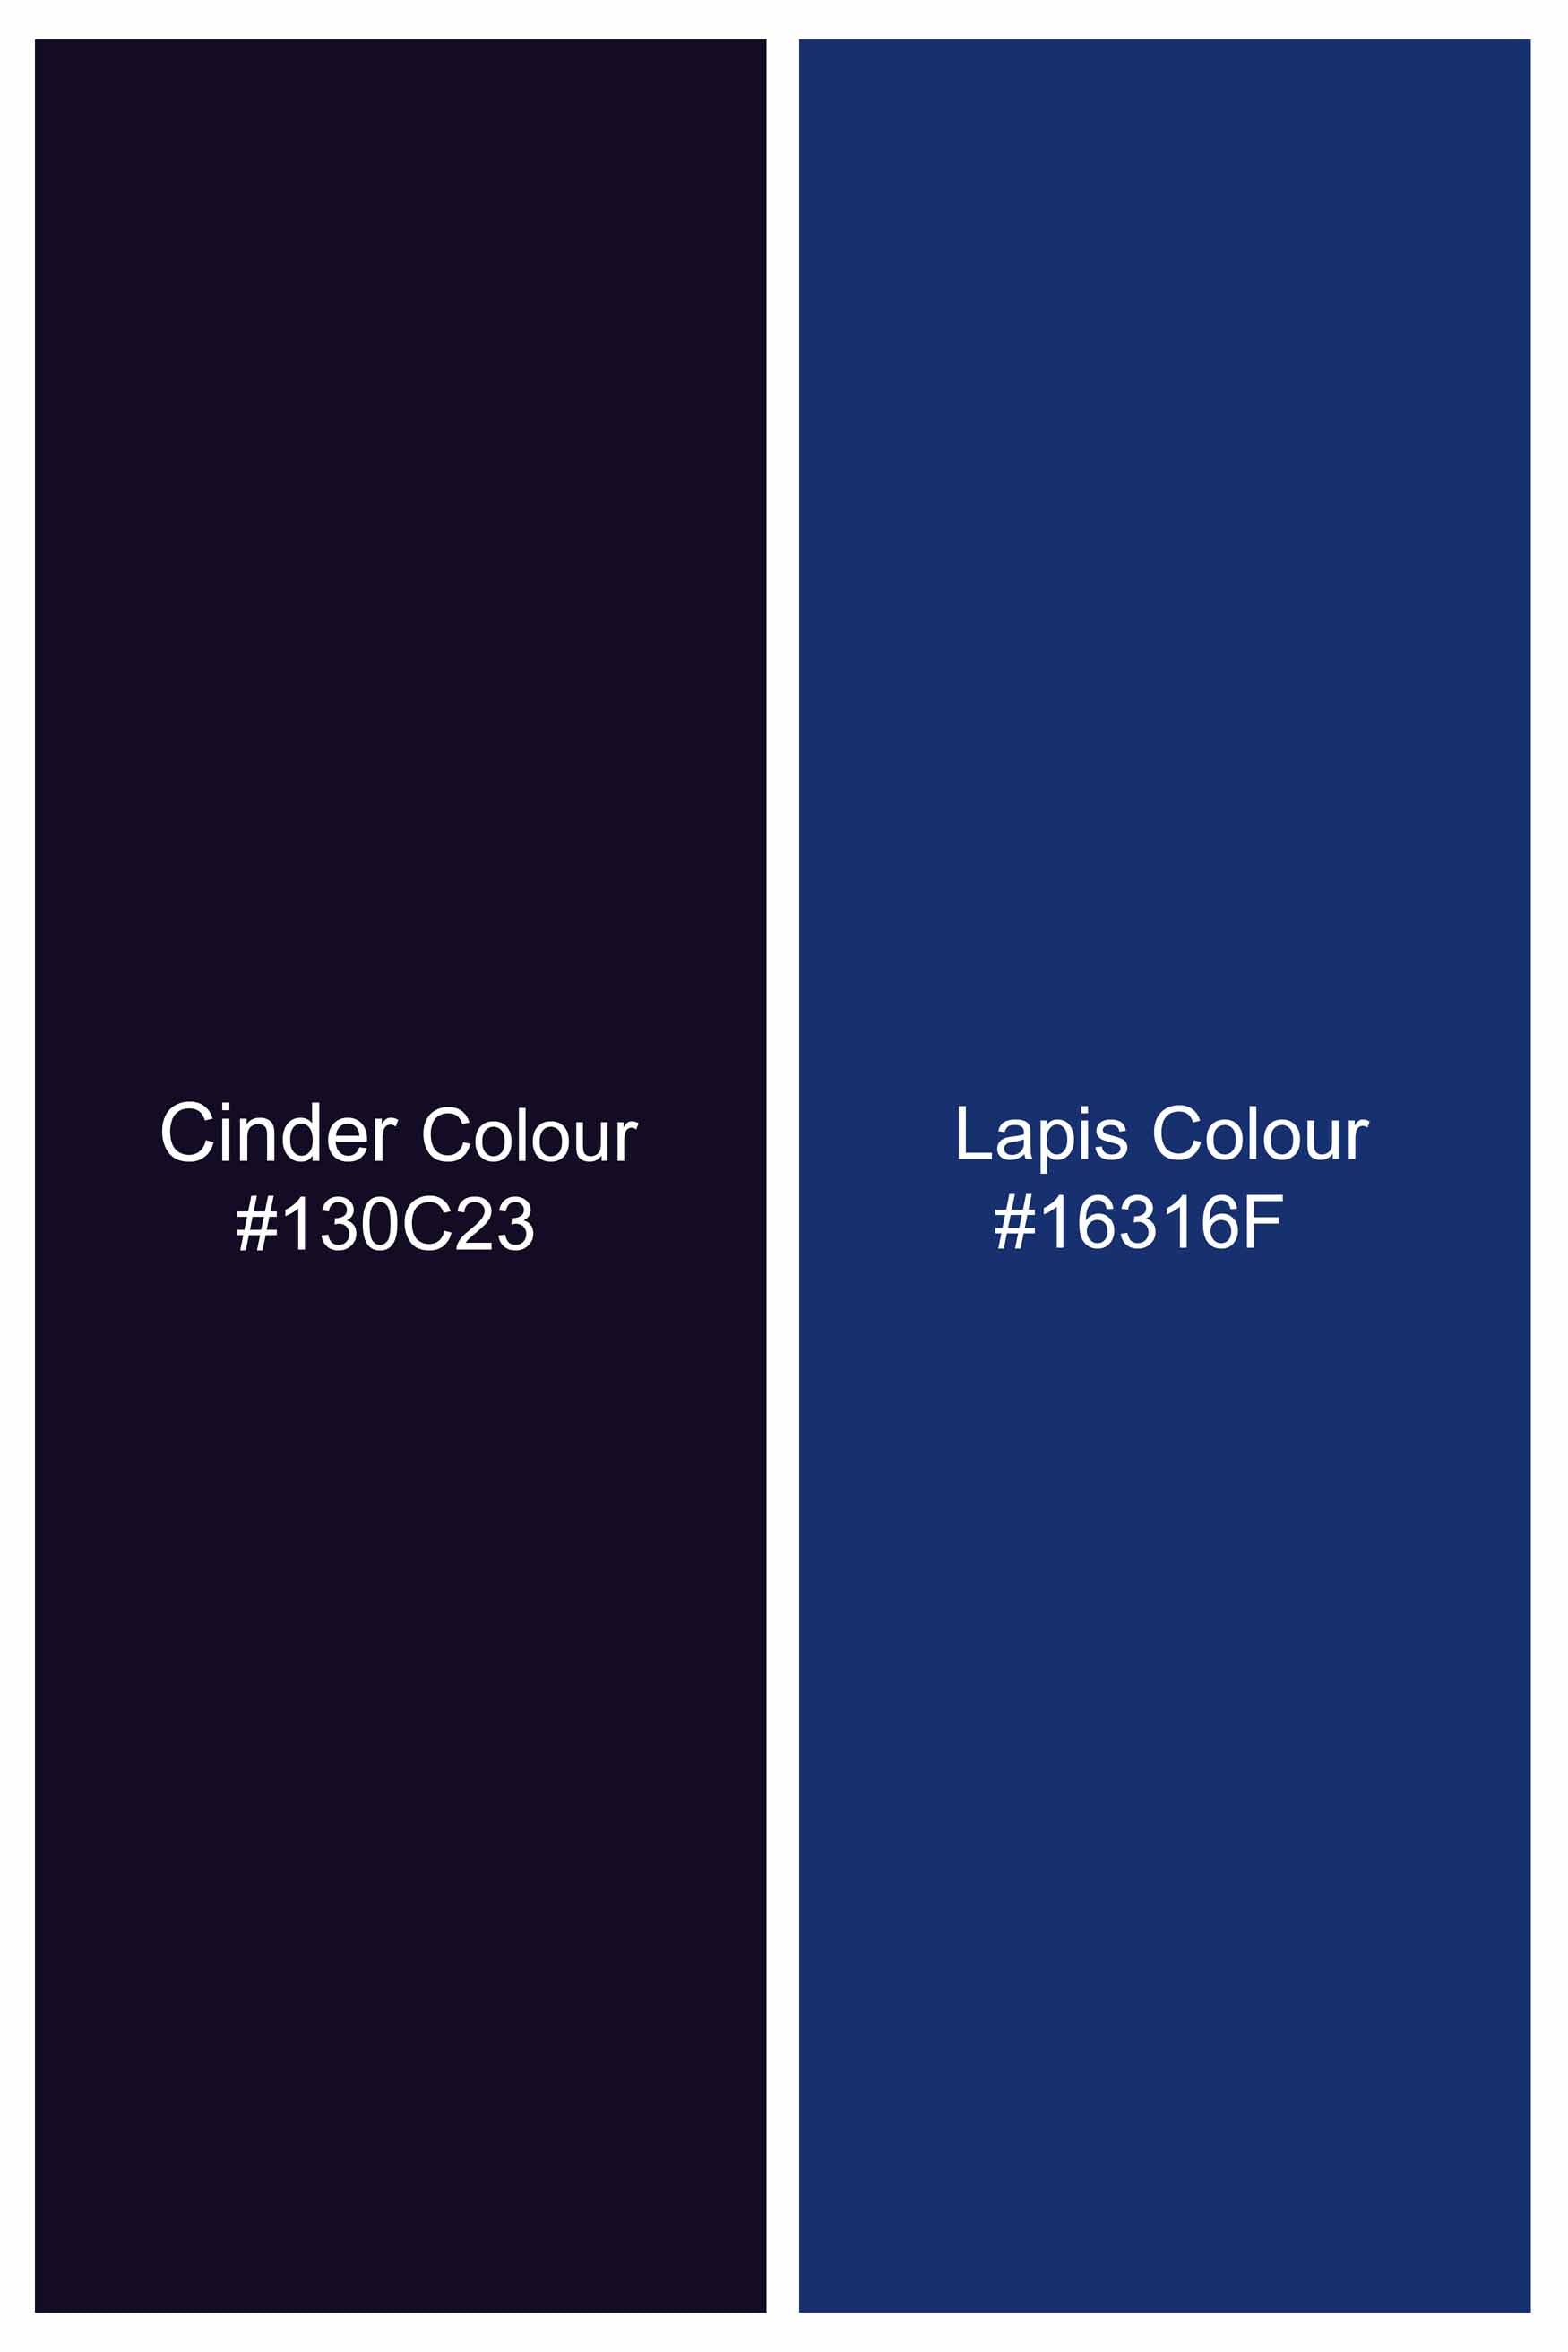 Indigo Blue and Lapis Blue Striped Chambray Shirt